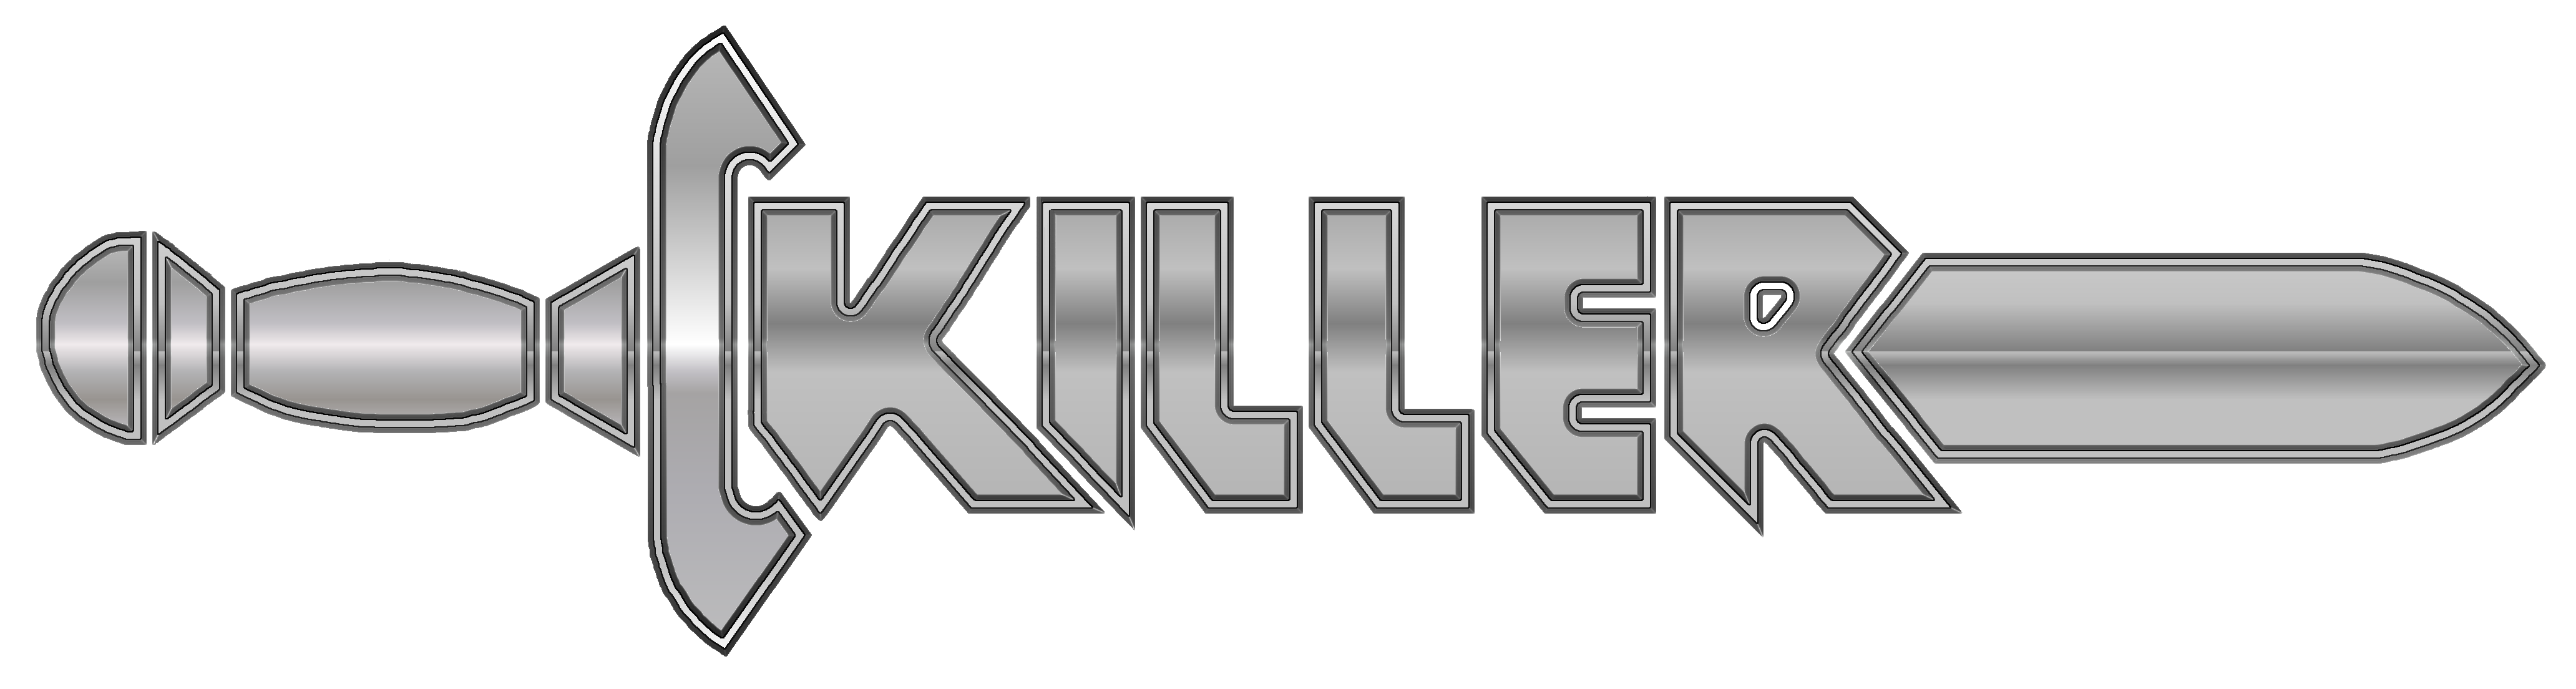 Killer Logo 2011 Cutout Chrome 1 .png - Killer, Transparent background PNG HD thumbnail